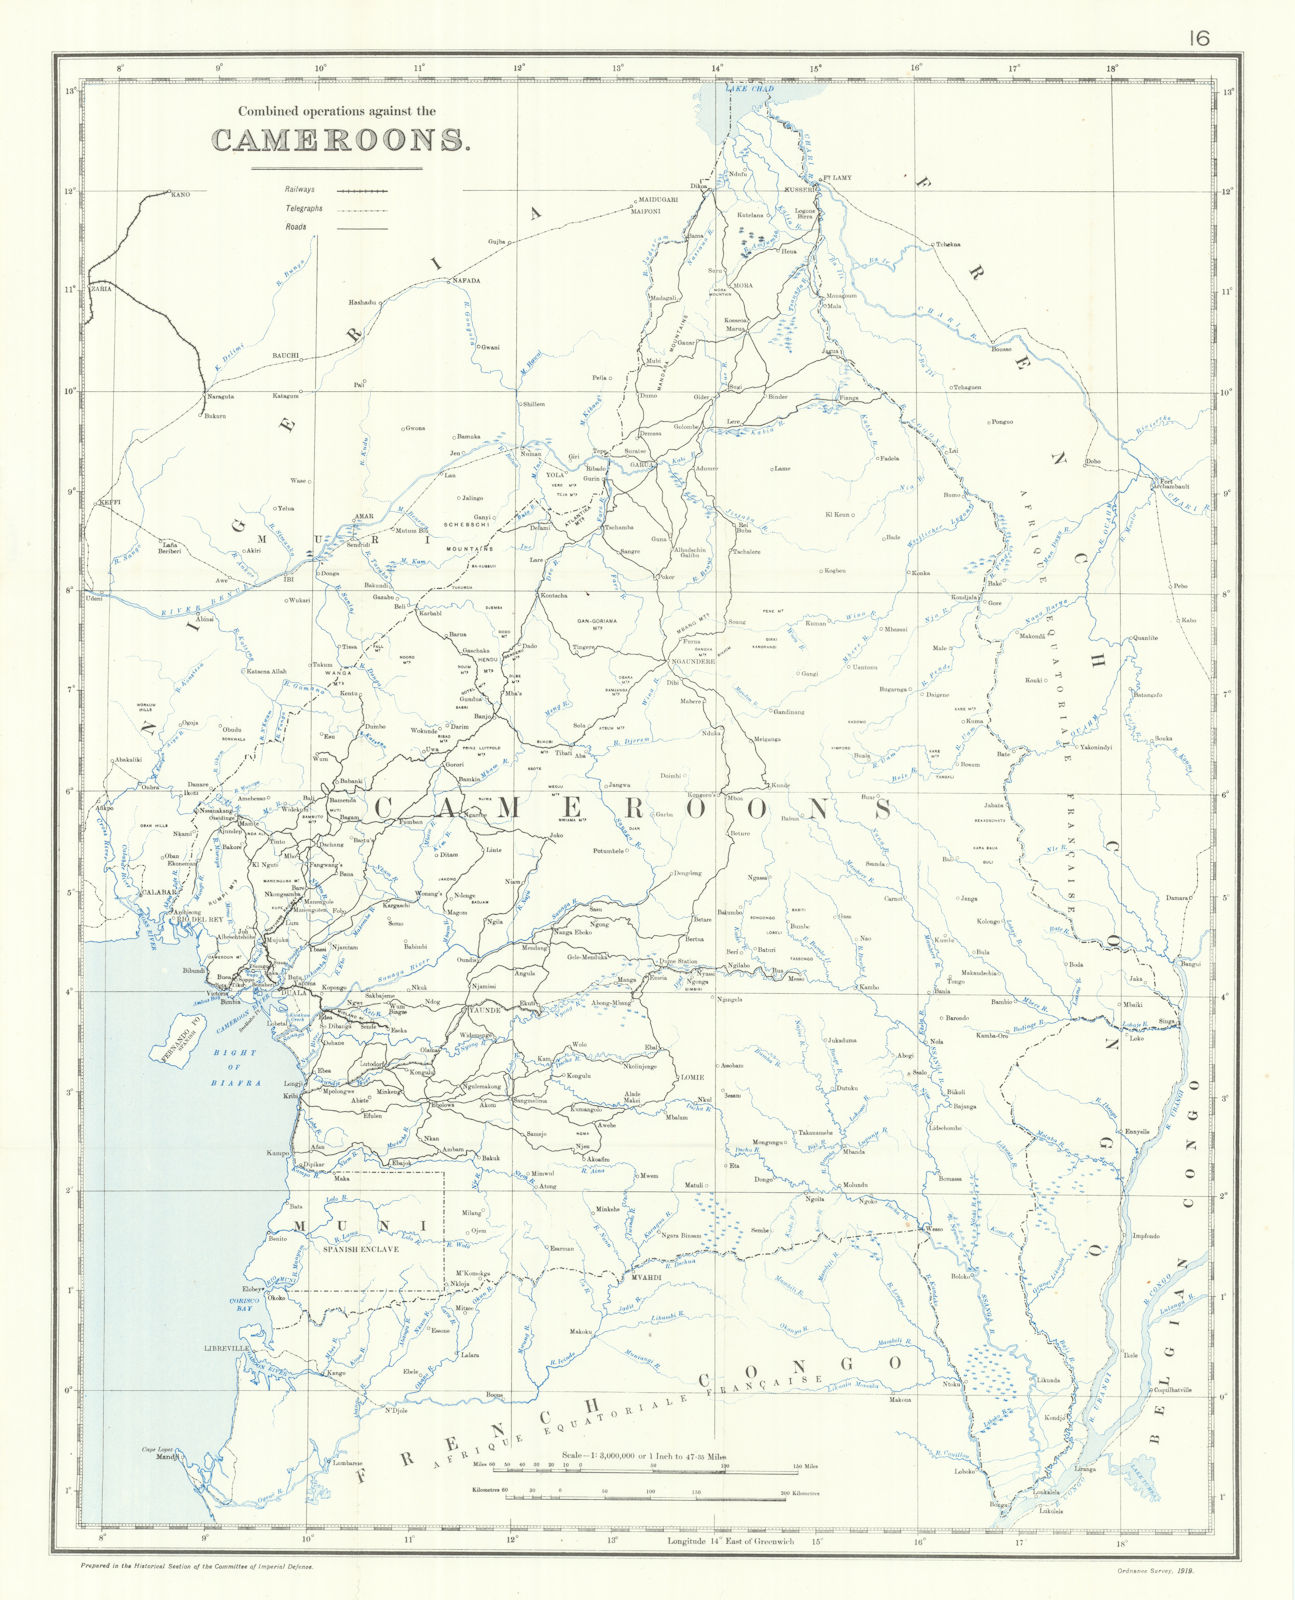 Cameroon operations. Kamerun Campaign. 1914. First World War. 1920 old map